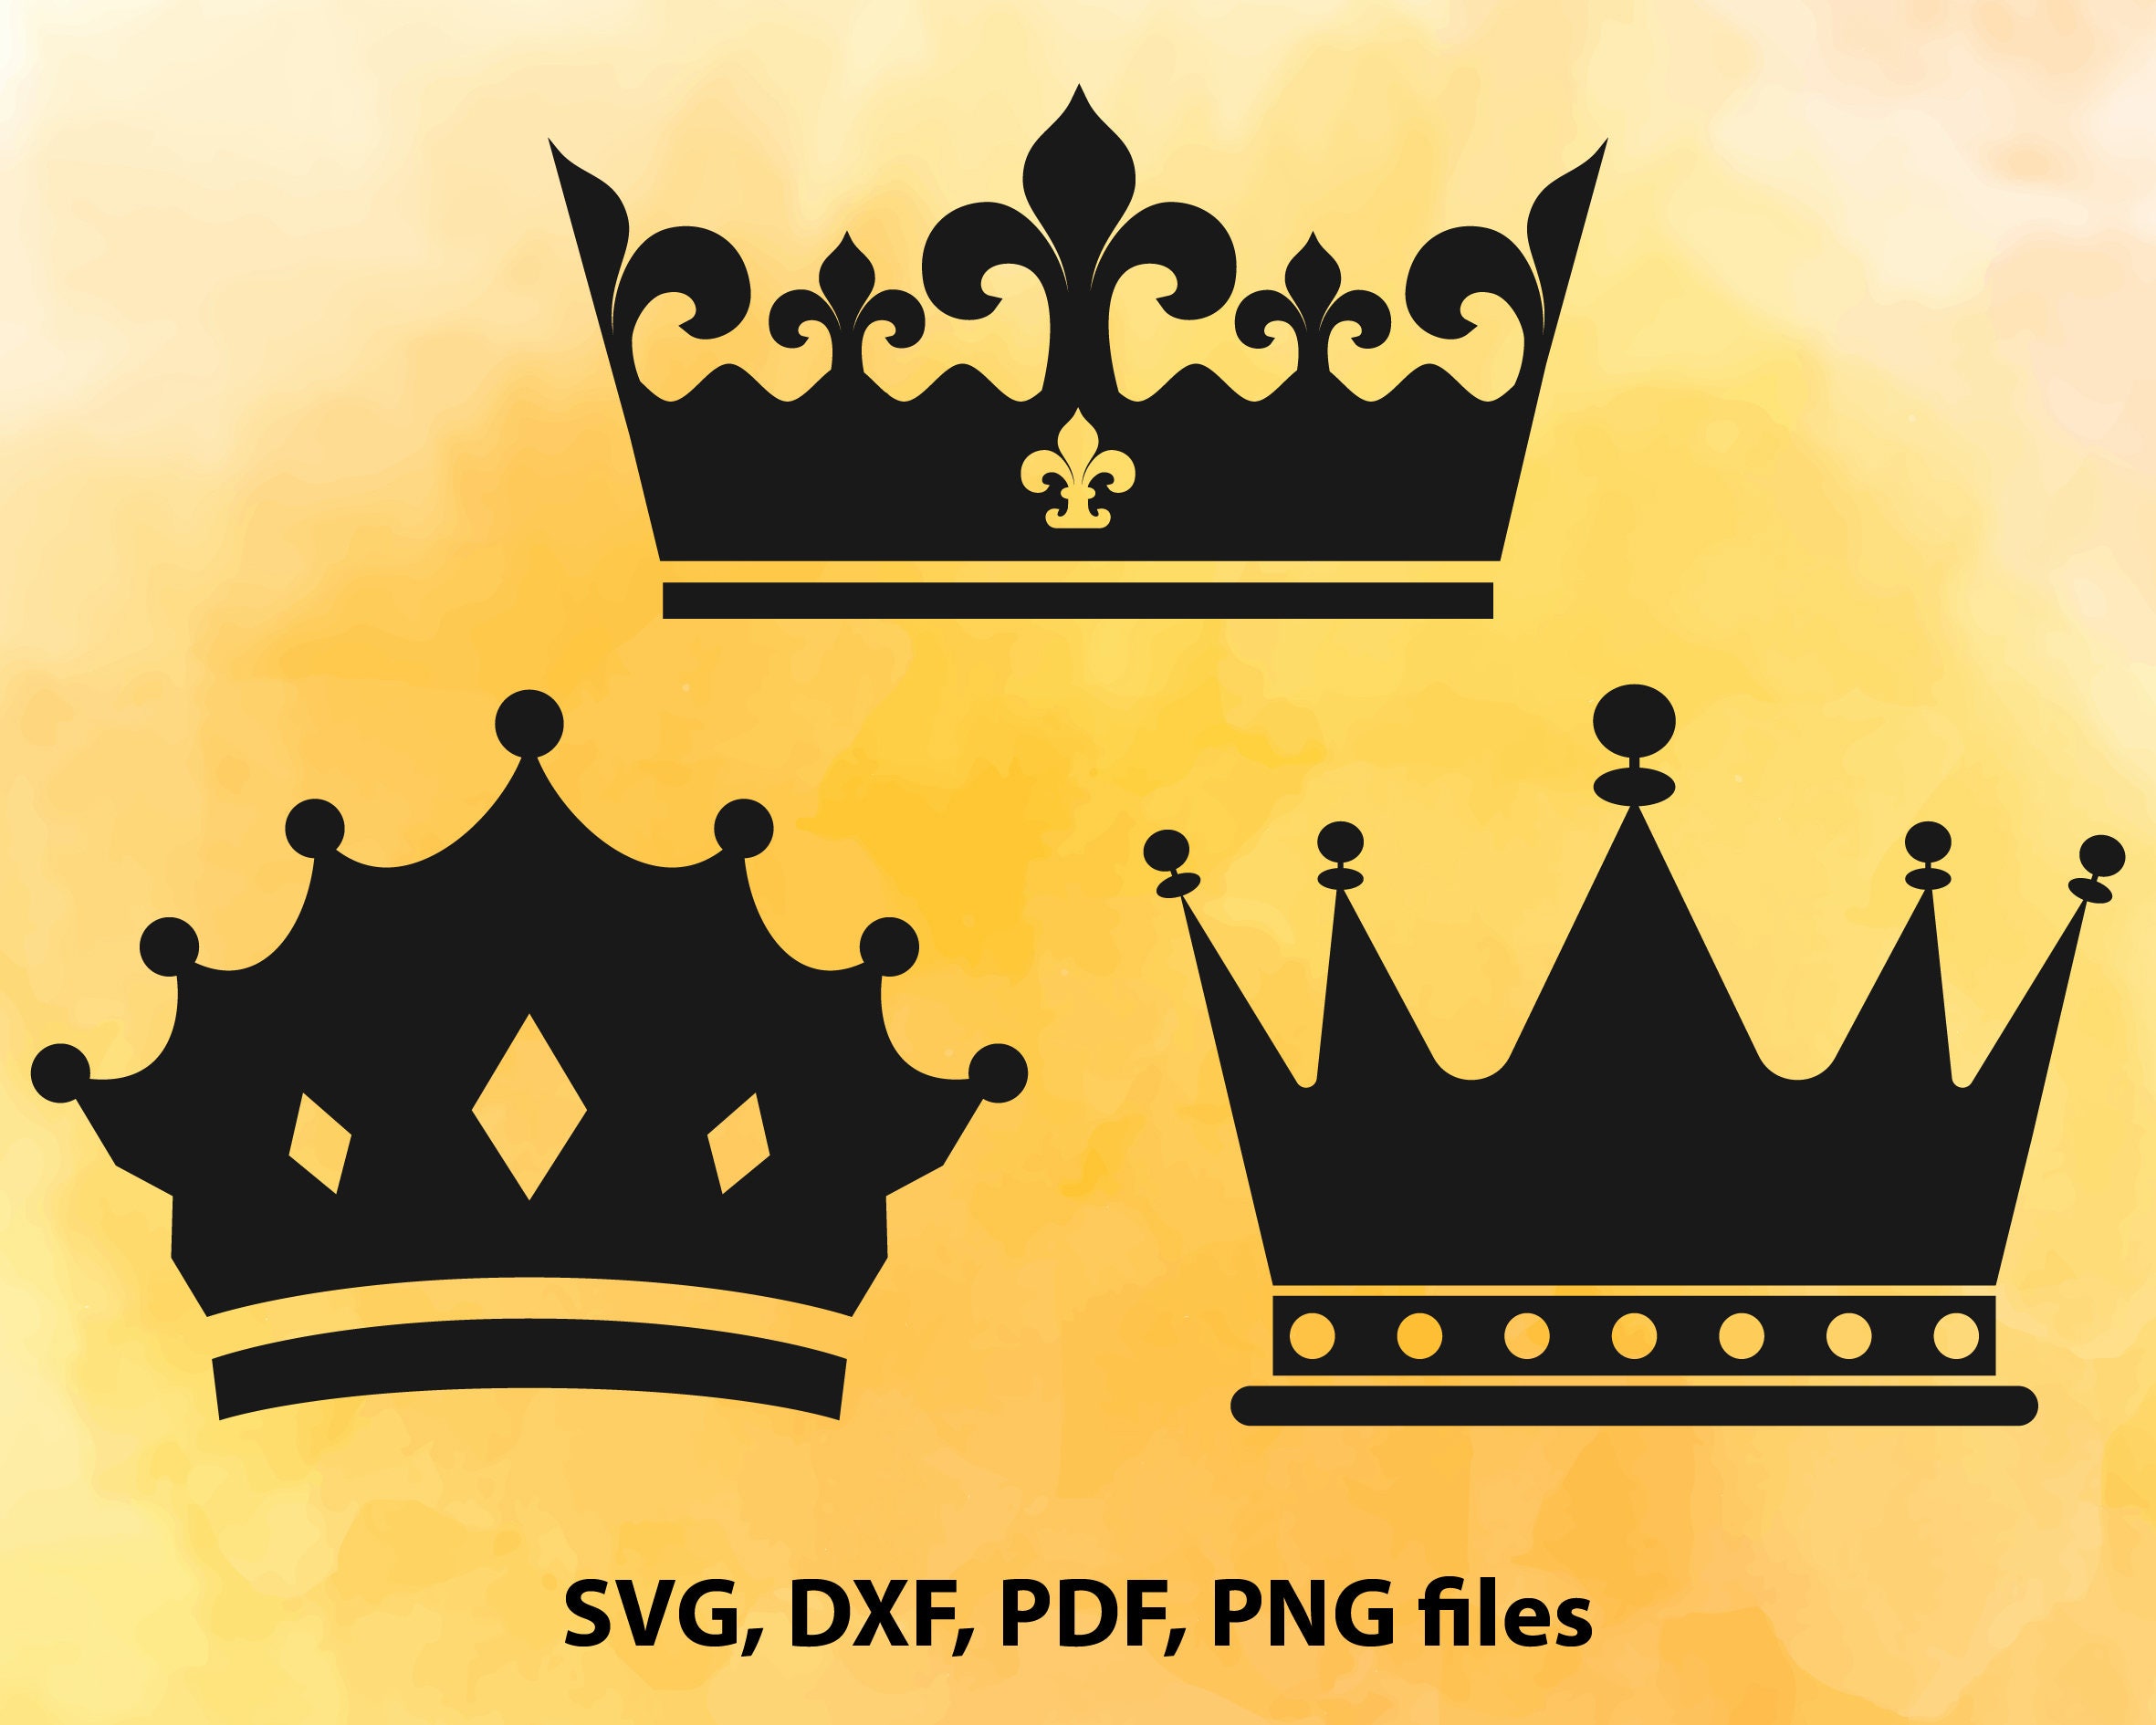 Crown SVG file Crown clipart Queen crown King crown Cut